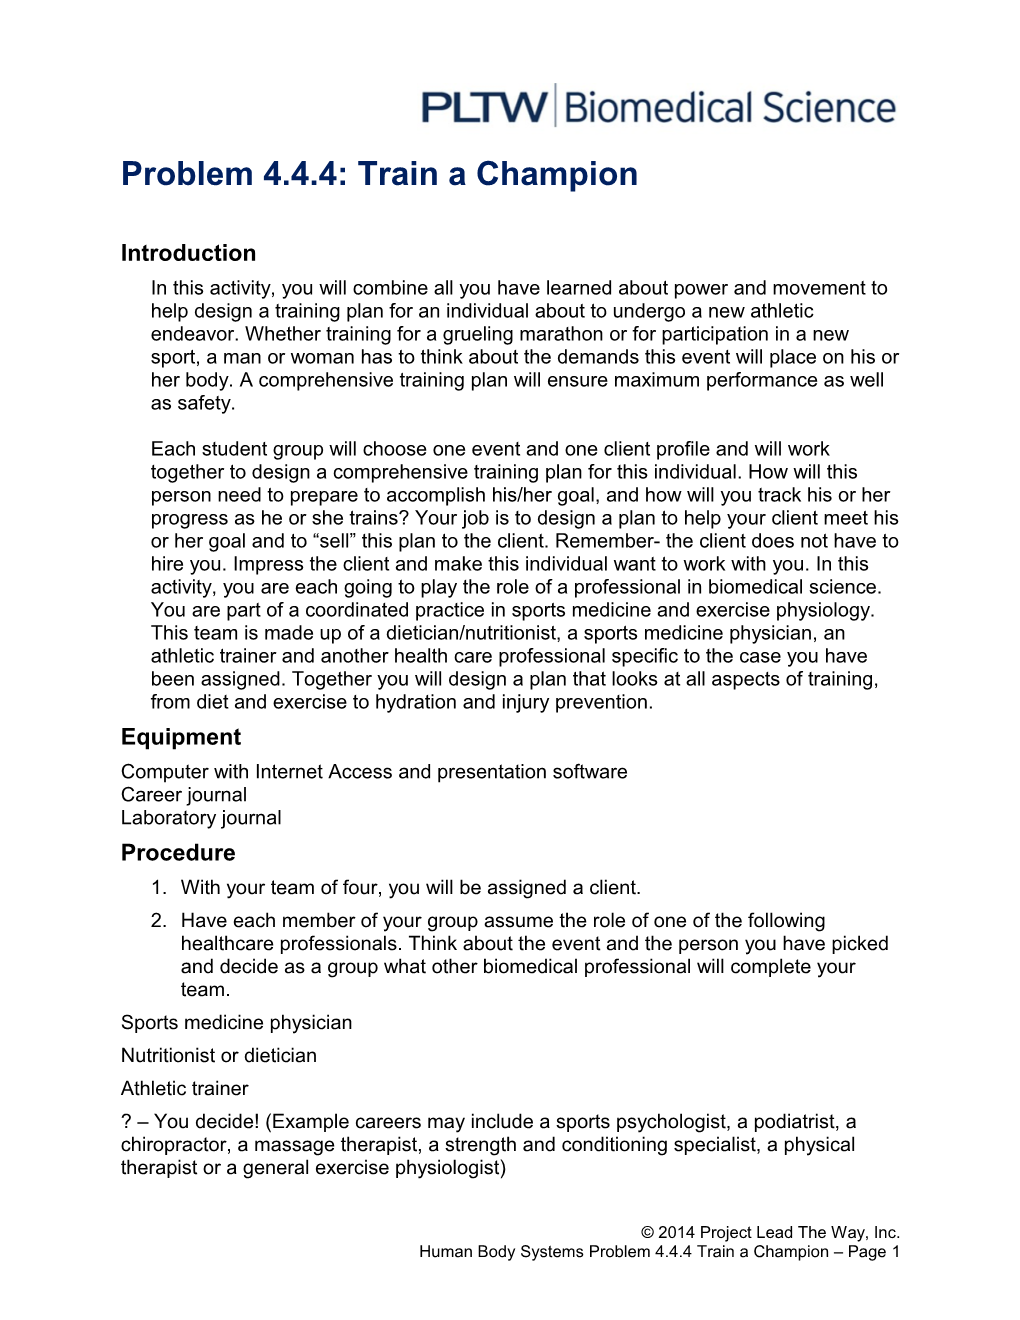 Problem 4.4.4: Train a Champion